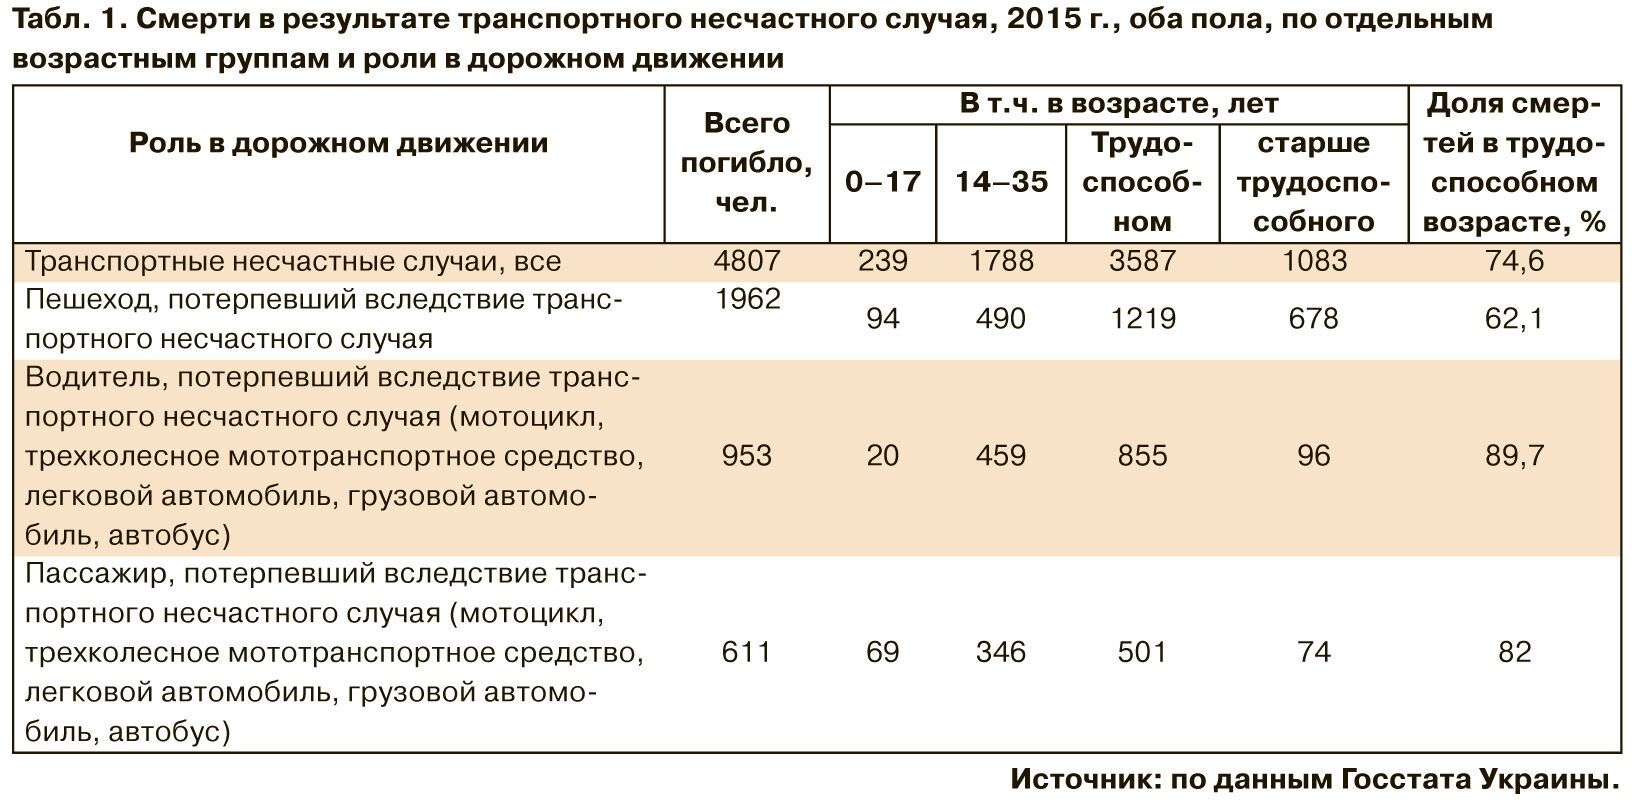 ДТП в Украине: озвучена страшная статистика по смертям